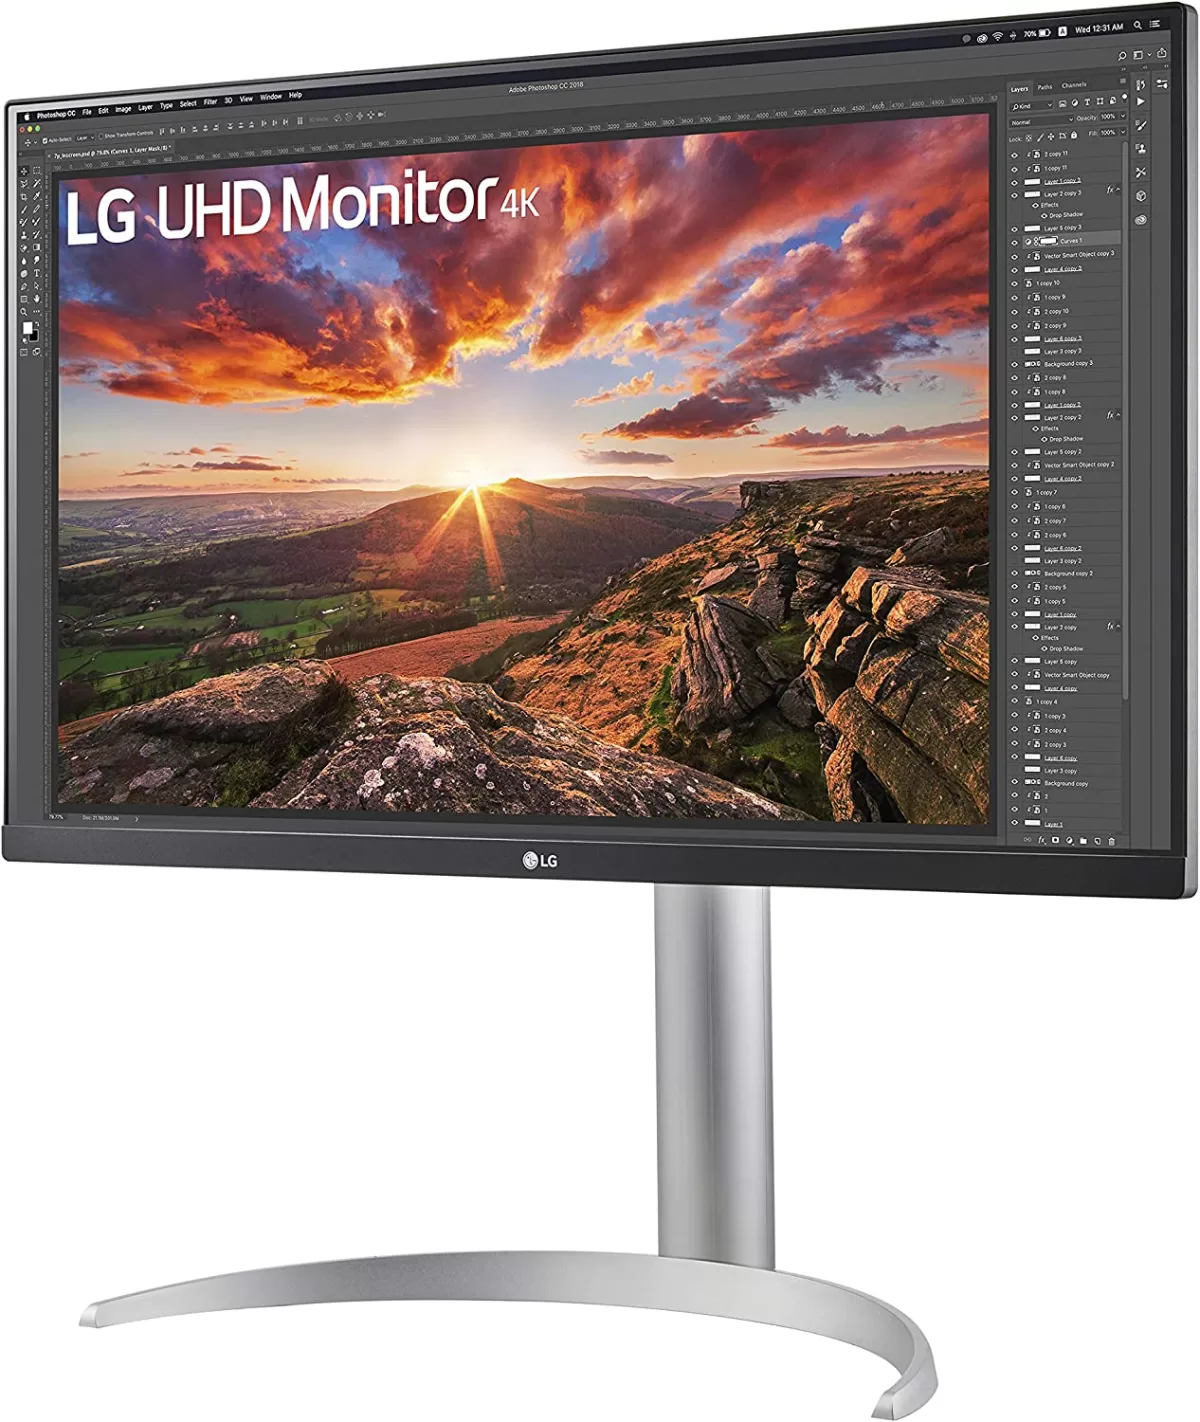 LG 27UP850 W Monitor 27 UHD 3840 x 2160 IPS Display